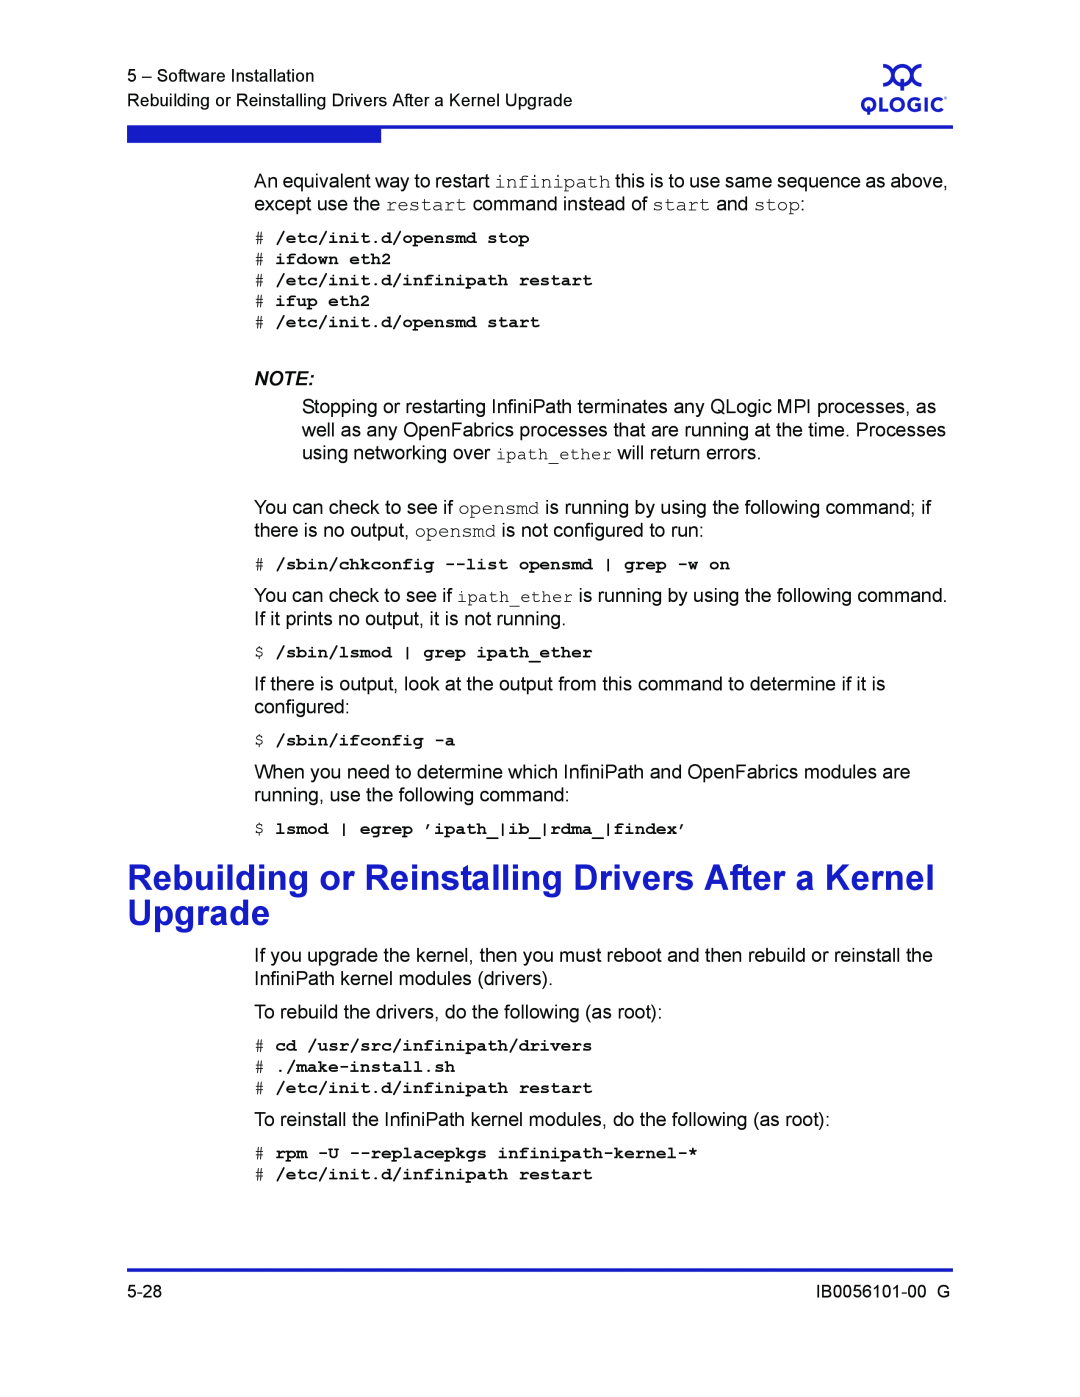 Q-Logic IB0056101-00 G manual Rebuilding or Reinstalling Drivers After a Kernel Upgrade 